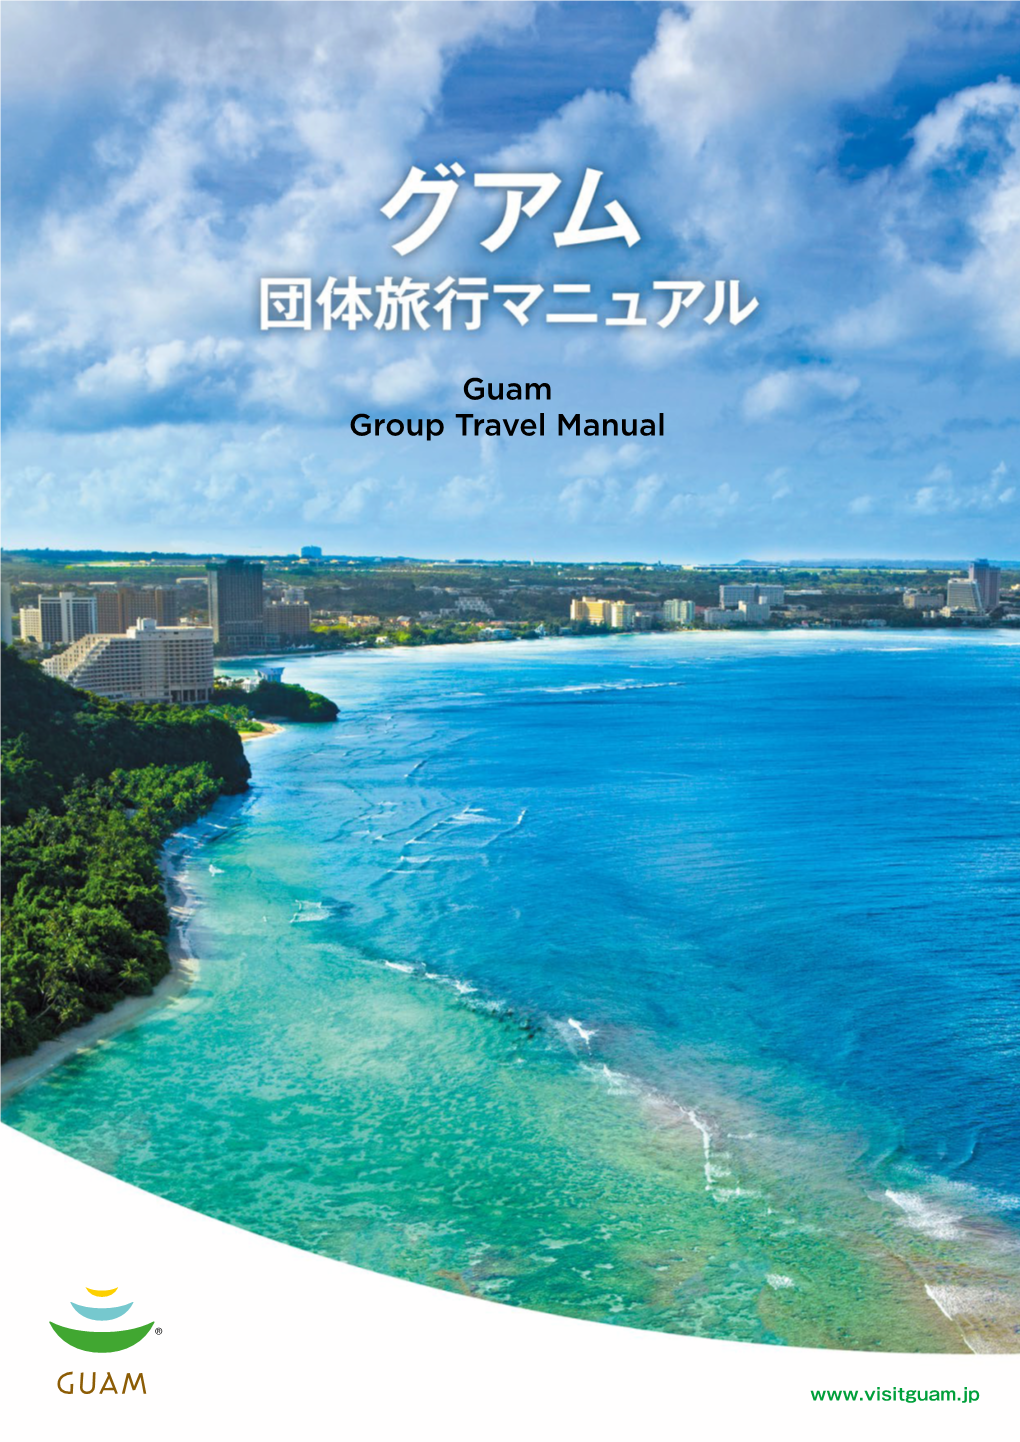 Guam Group Travel Manual